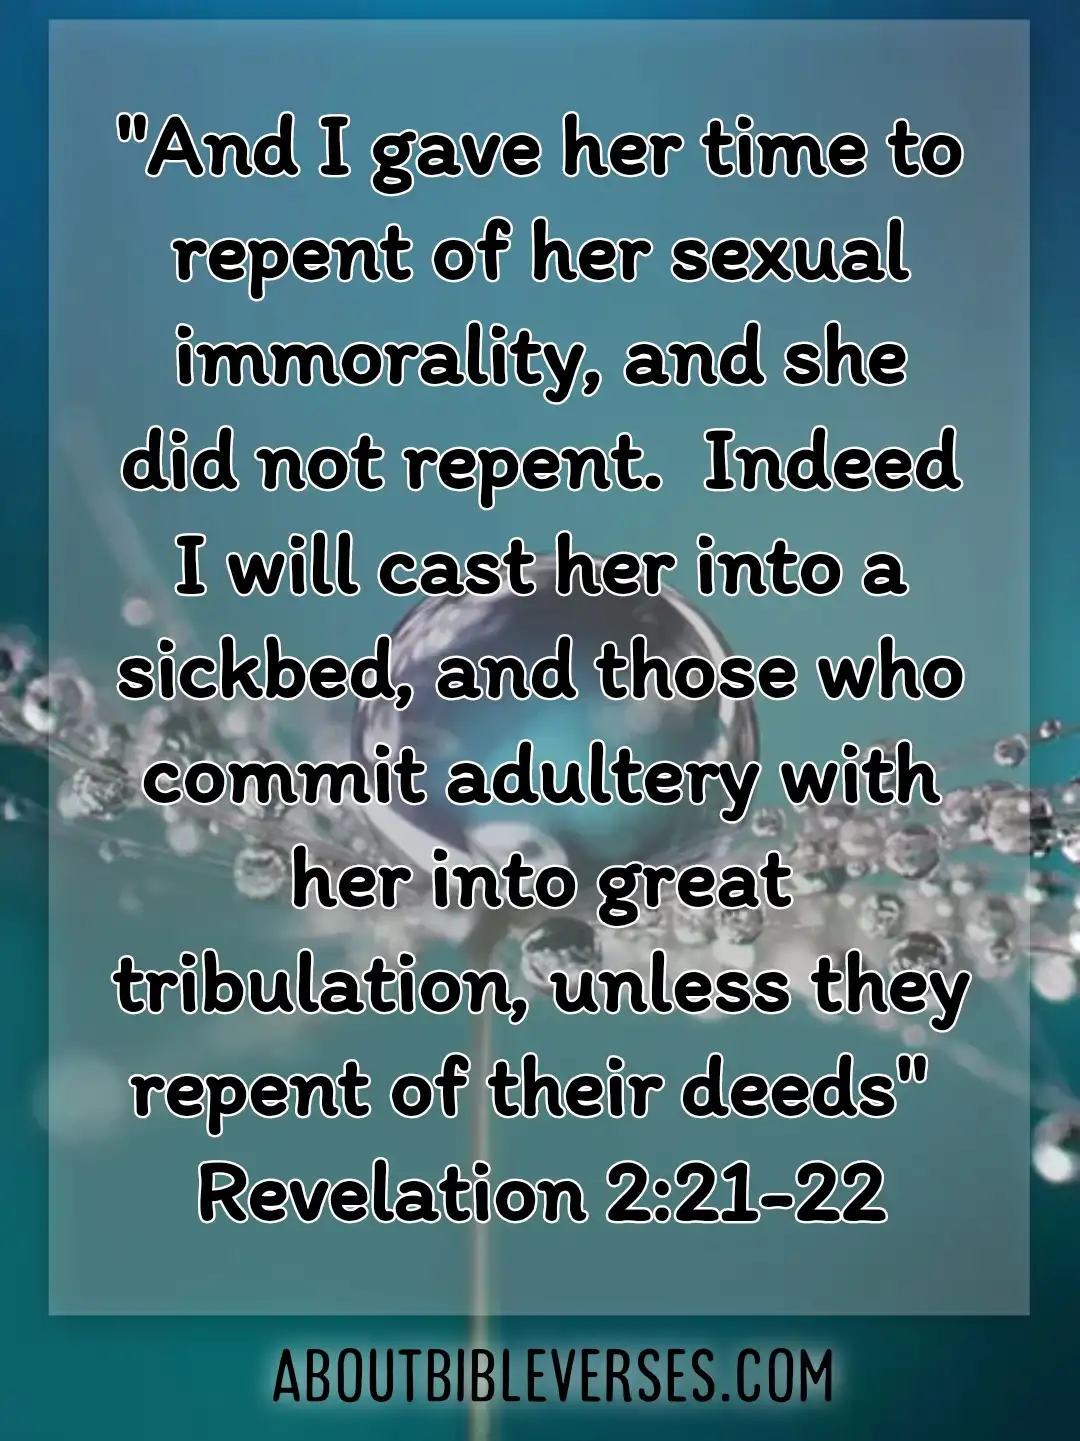 today bible verse (Revelation 2:21-22)